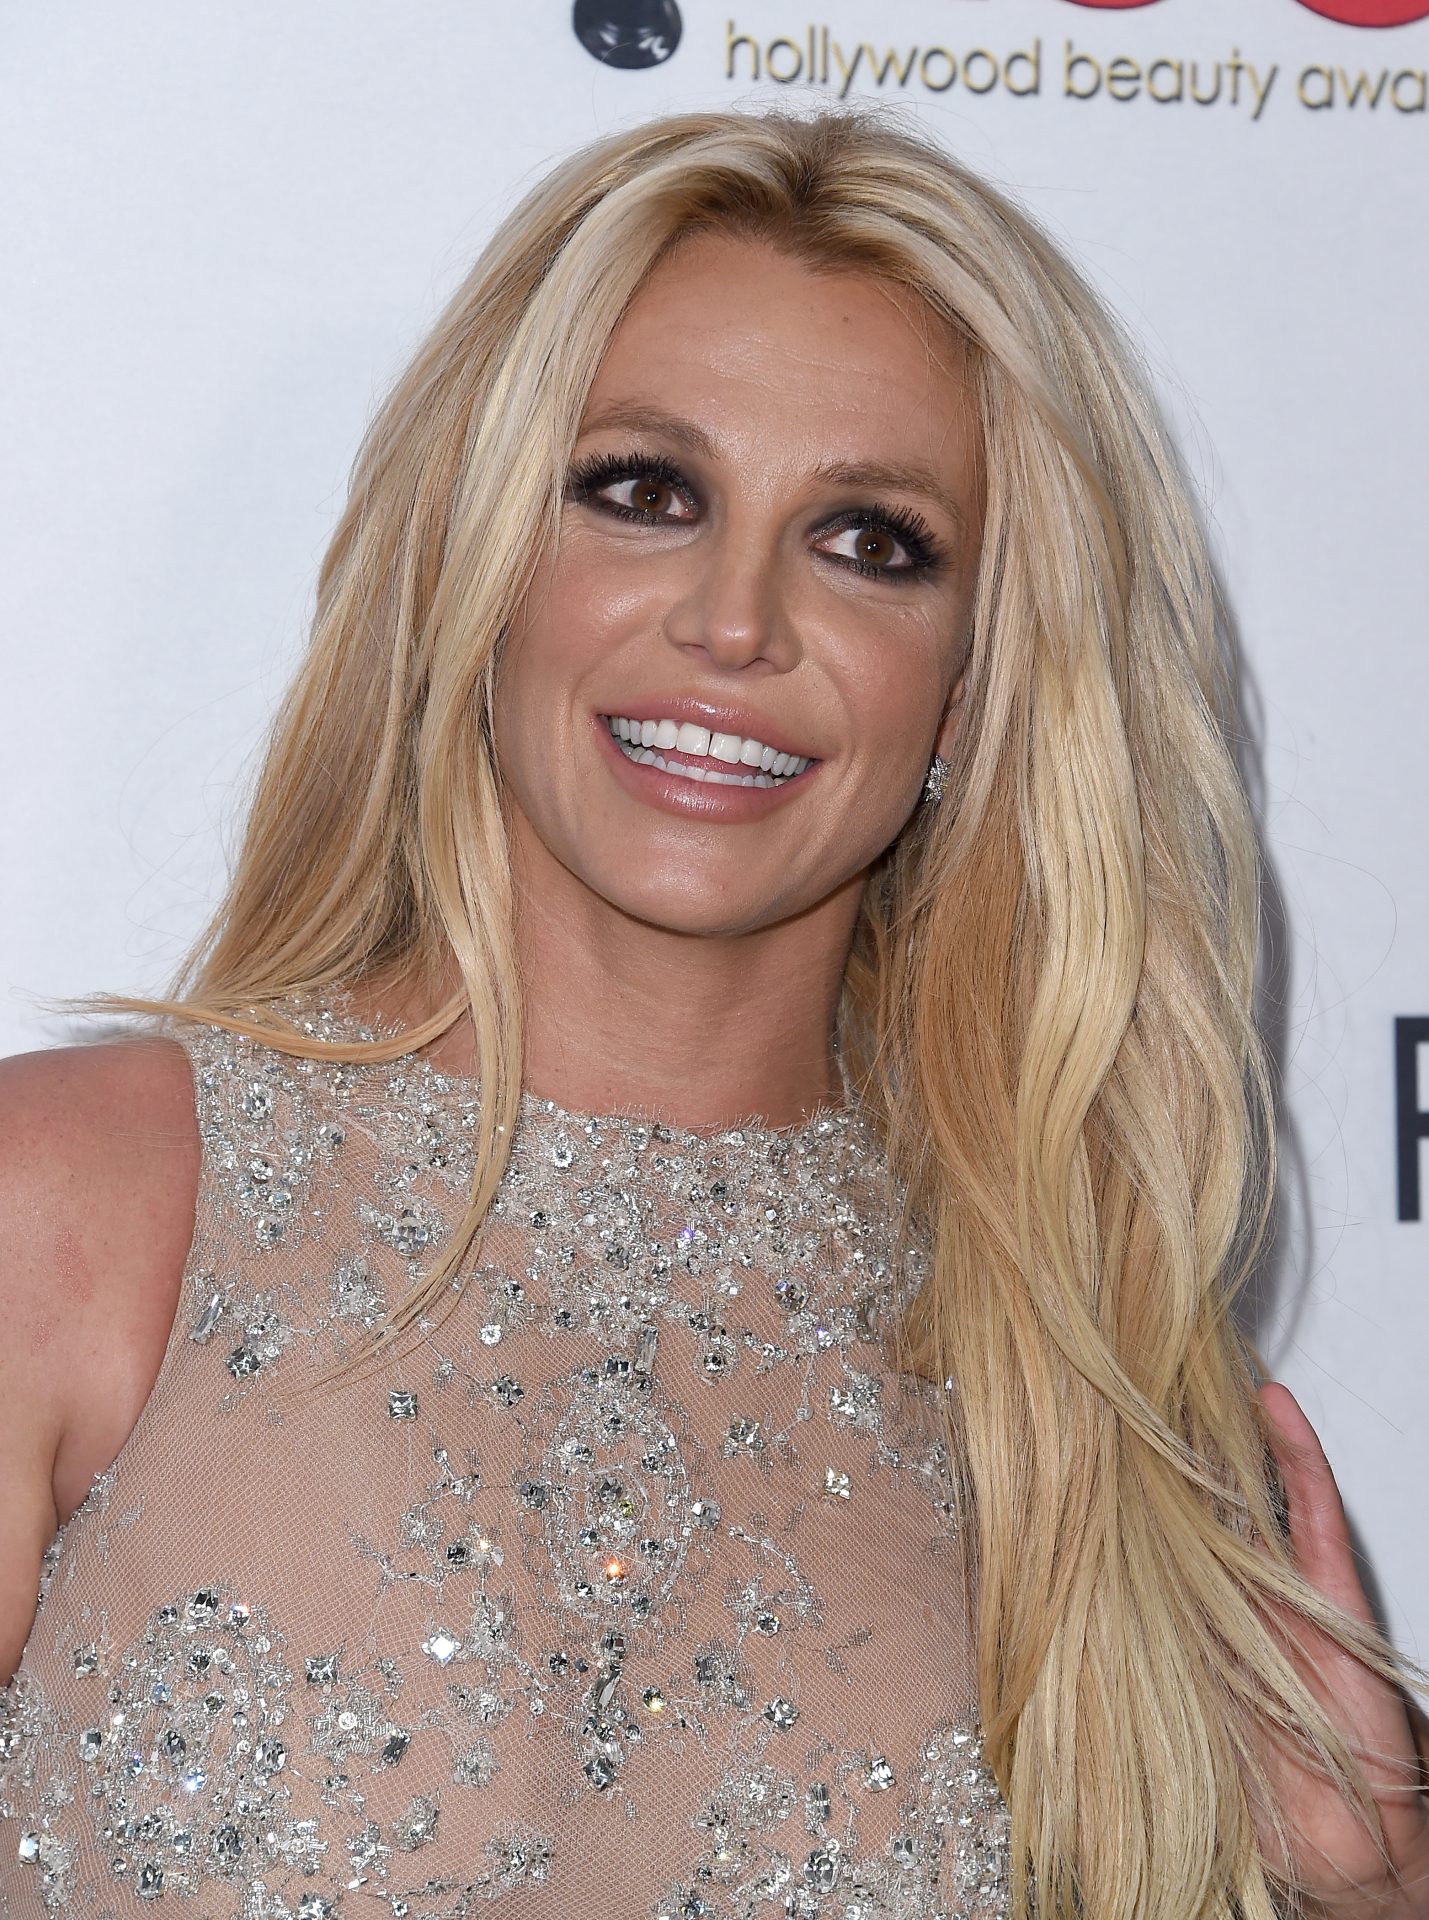 Britney Xxx Porn - The reaction to Britney's holiday photos shows extreme misogyny